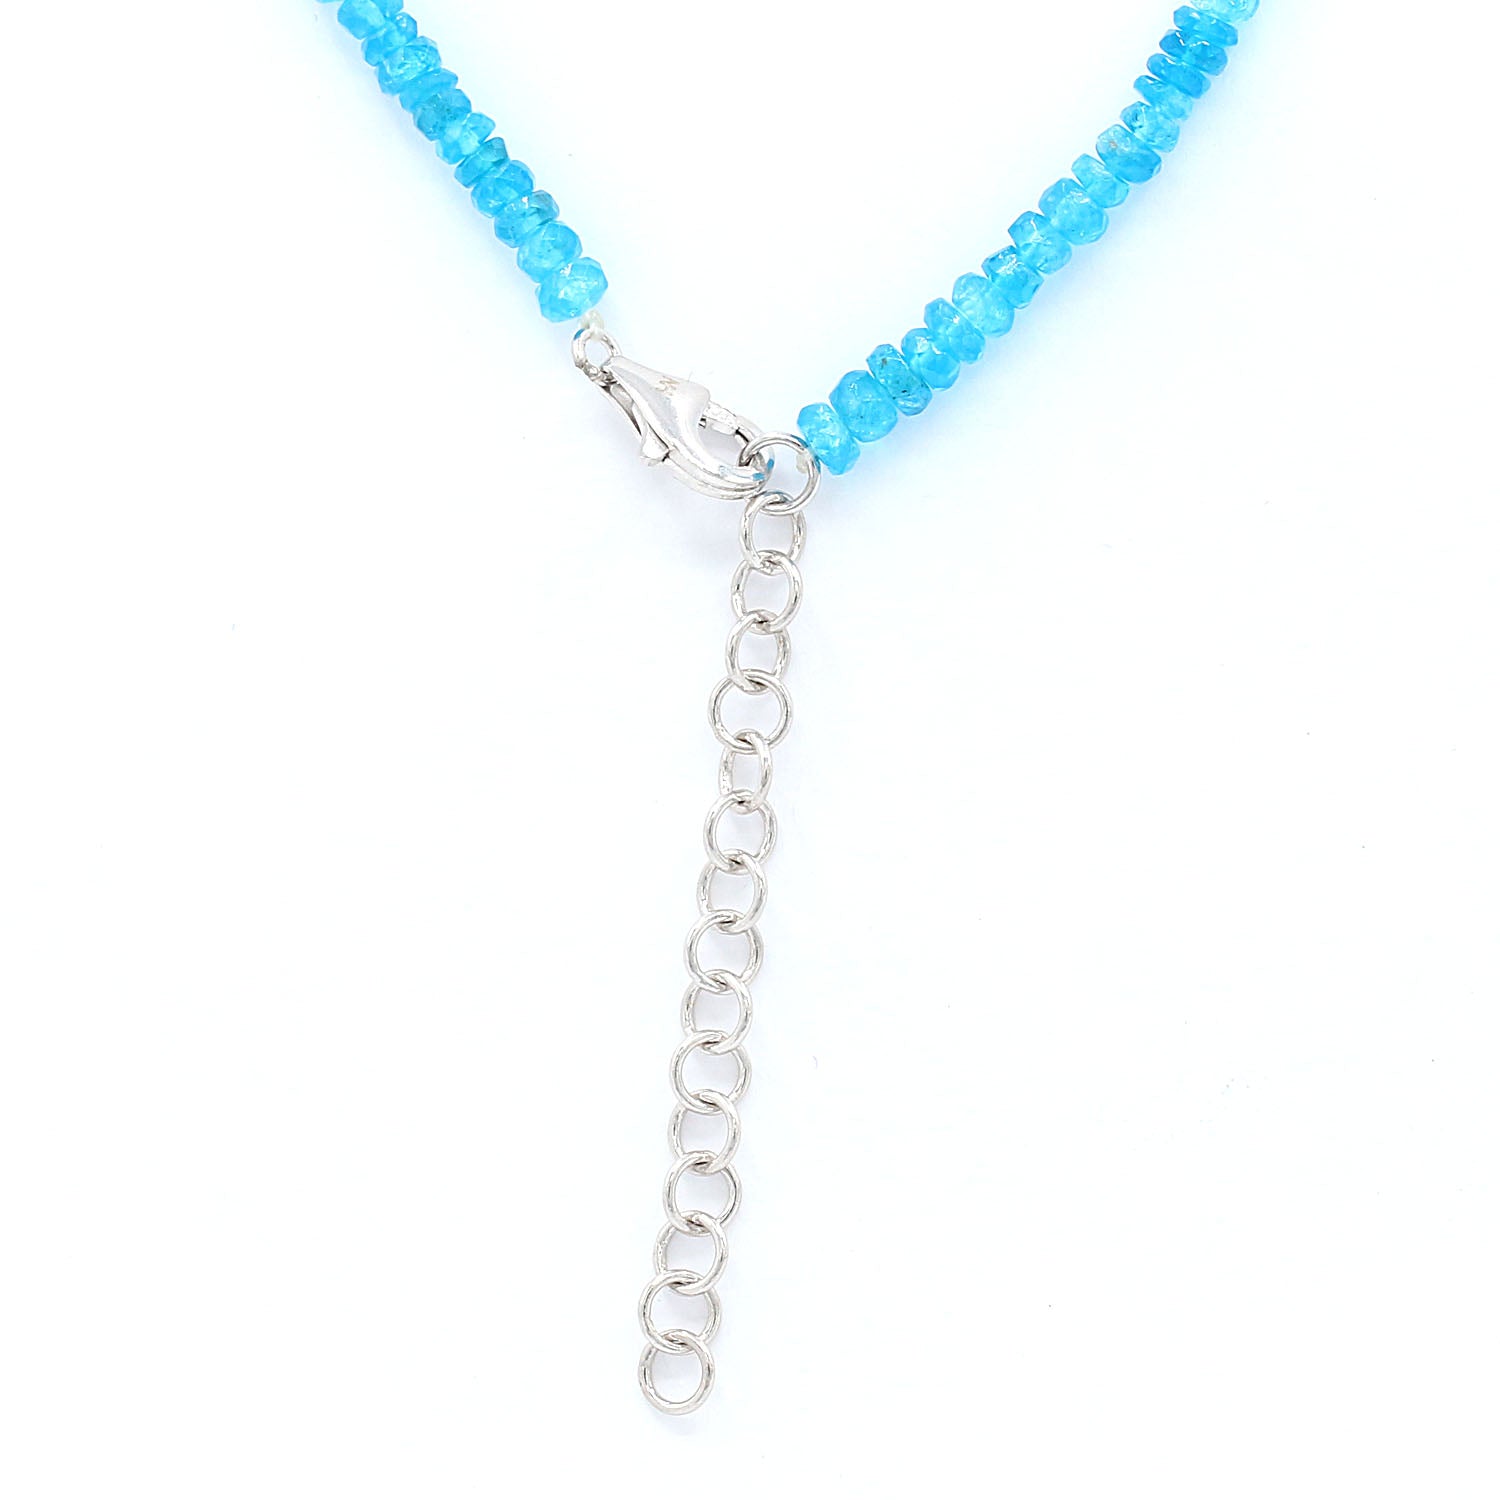 Gems en Vogue Neon Apatite Beads Necklace